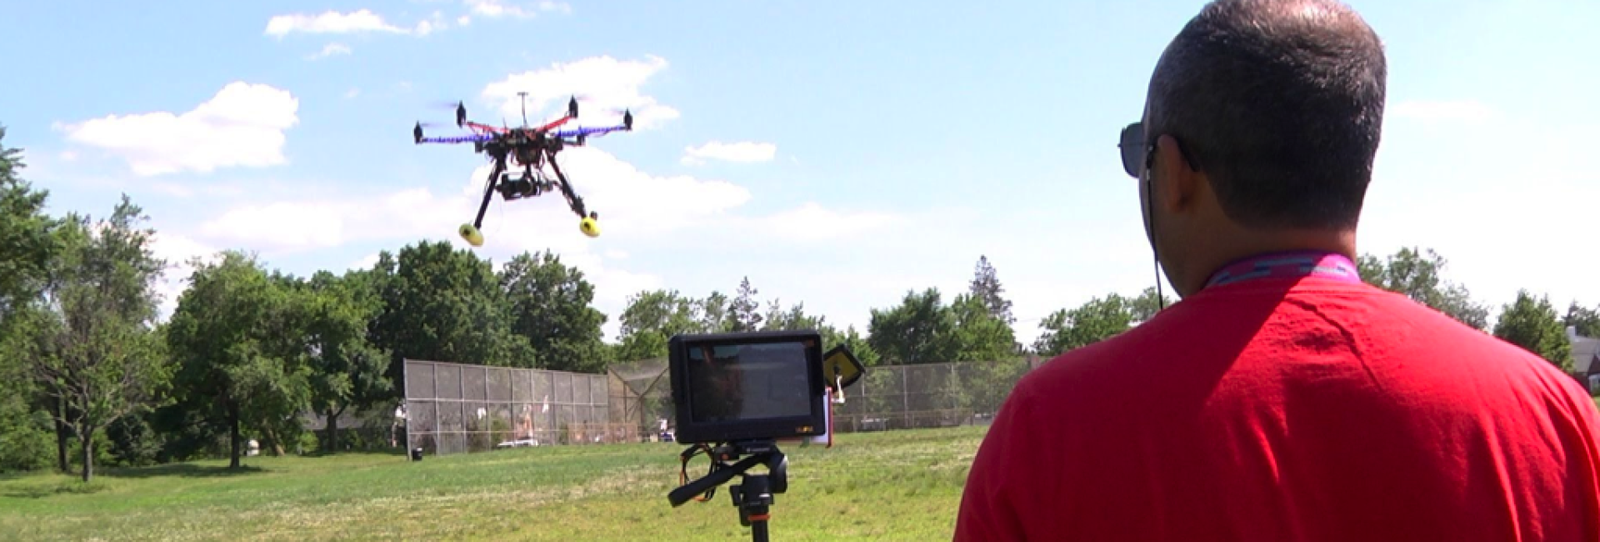 UAV Operator, Credit: YouTube